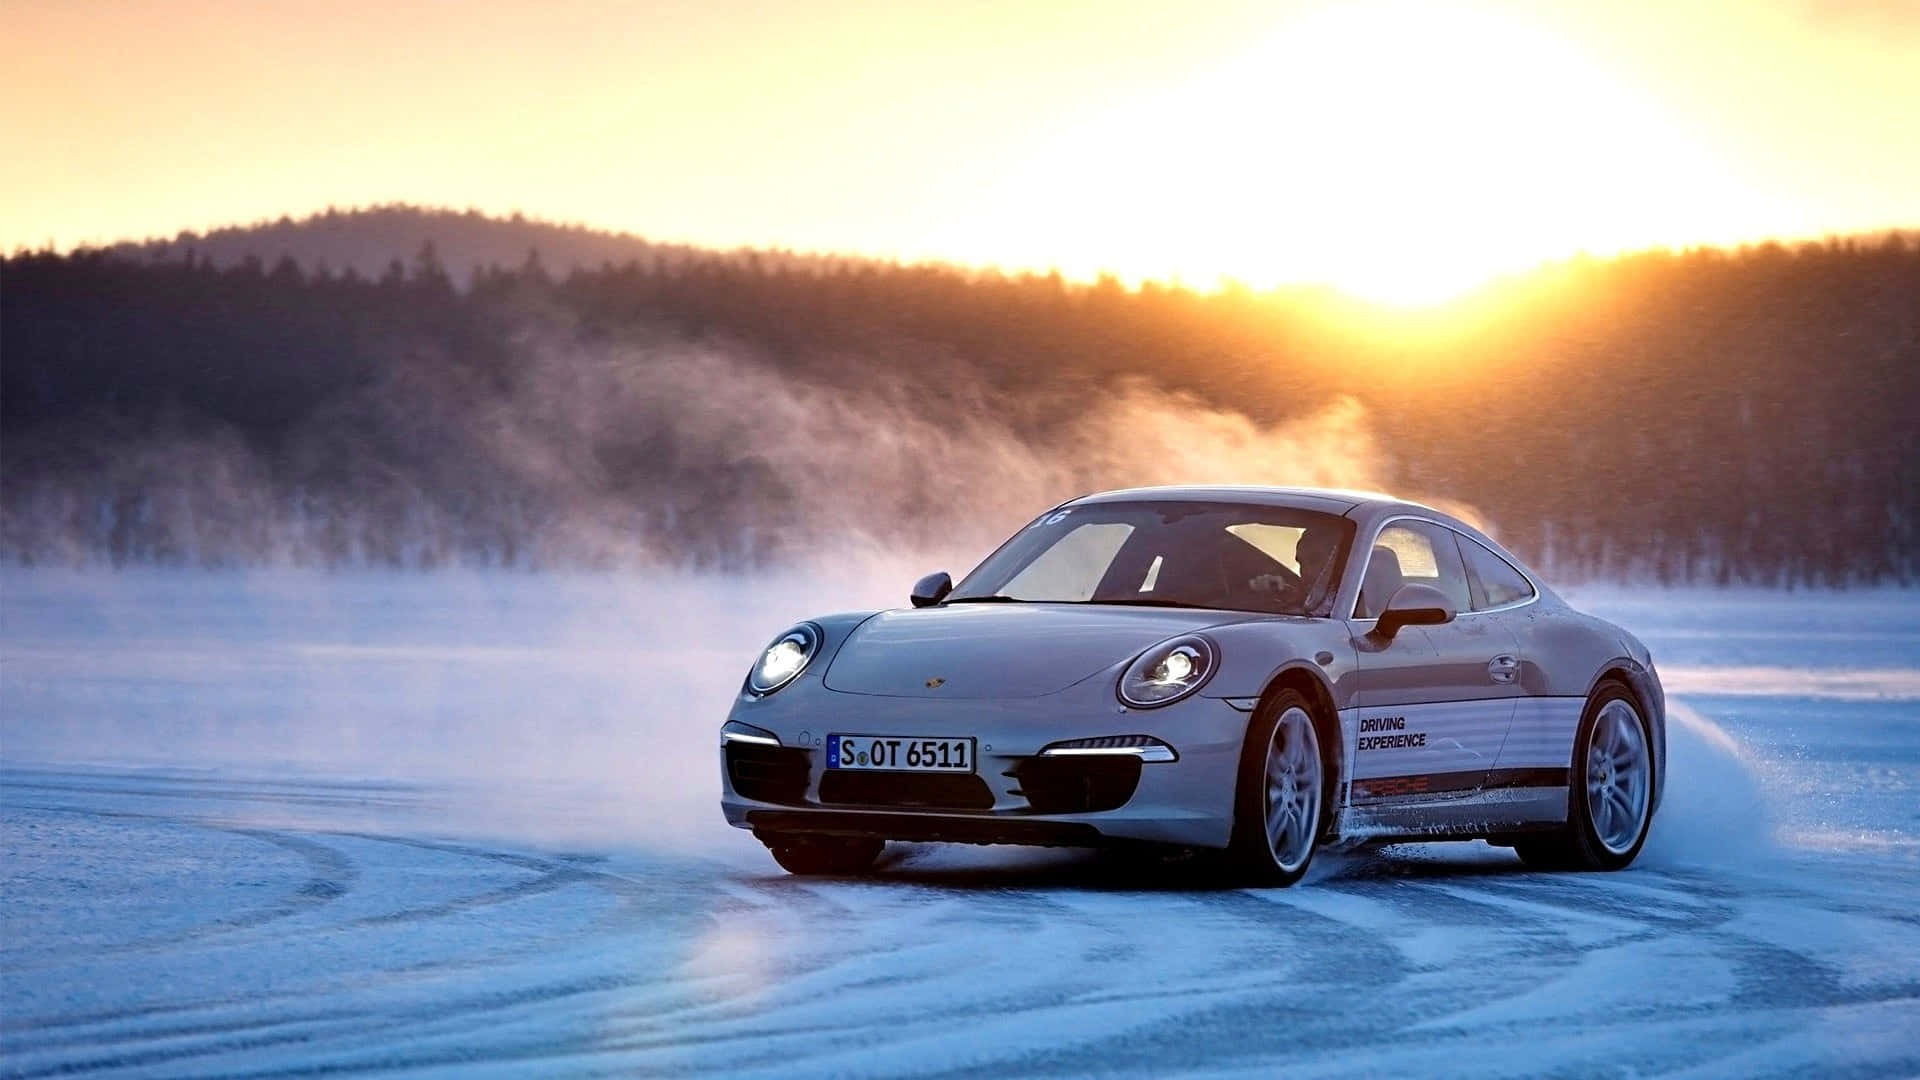 Eleganteauto Sportiva Porsche Su Strada Panoramica